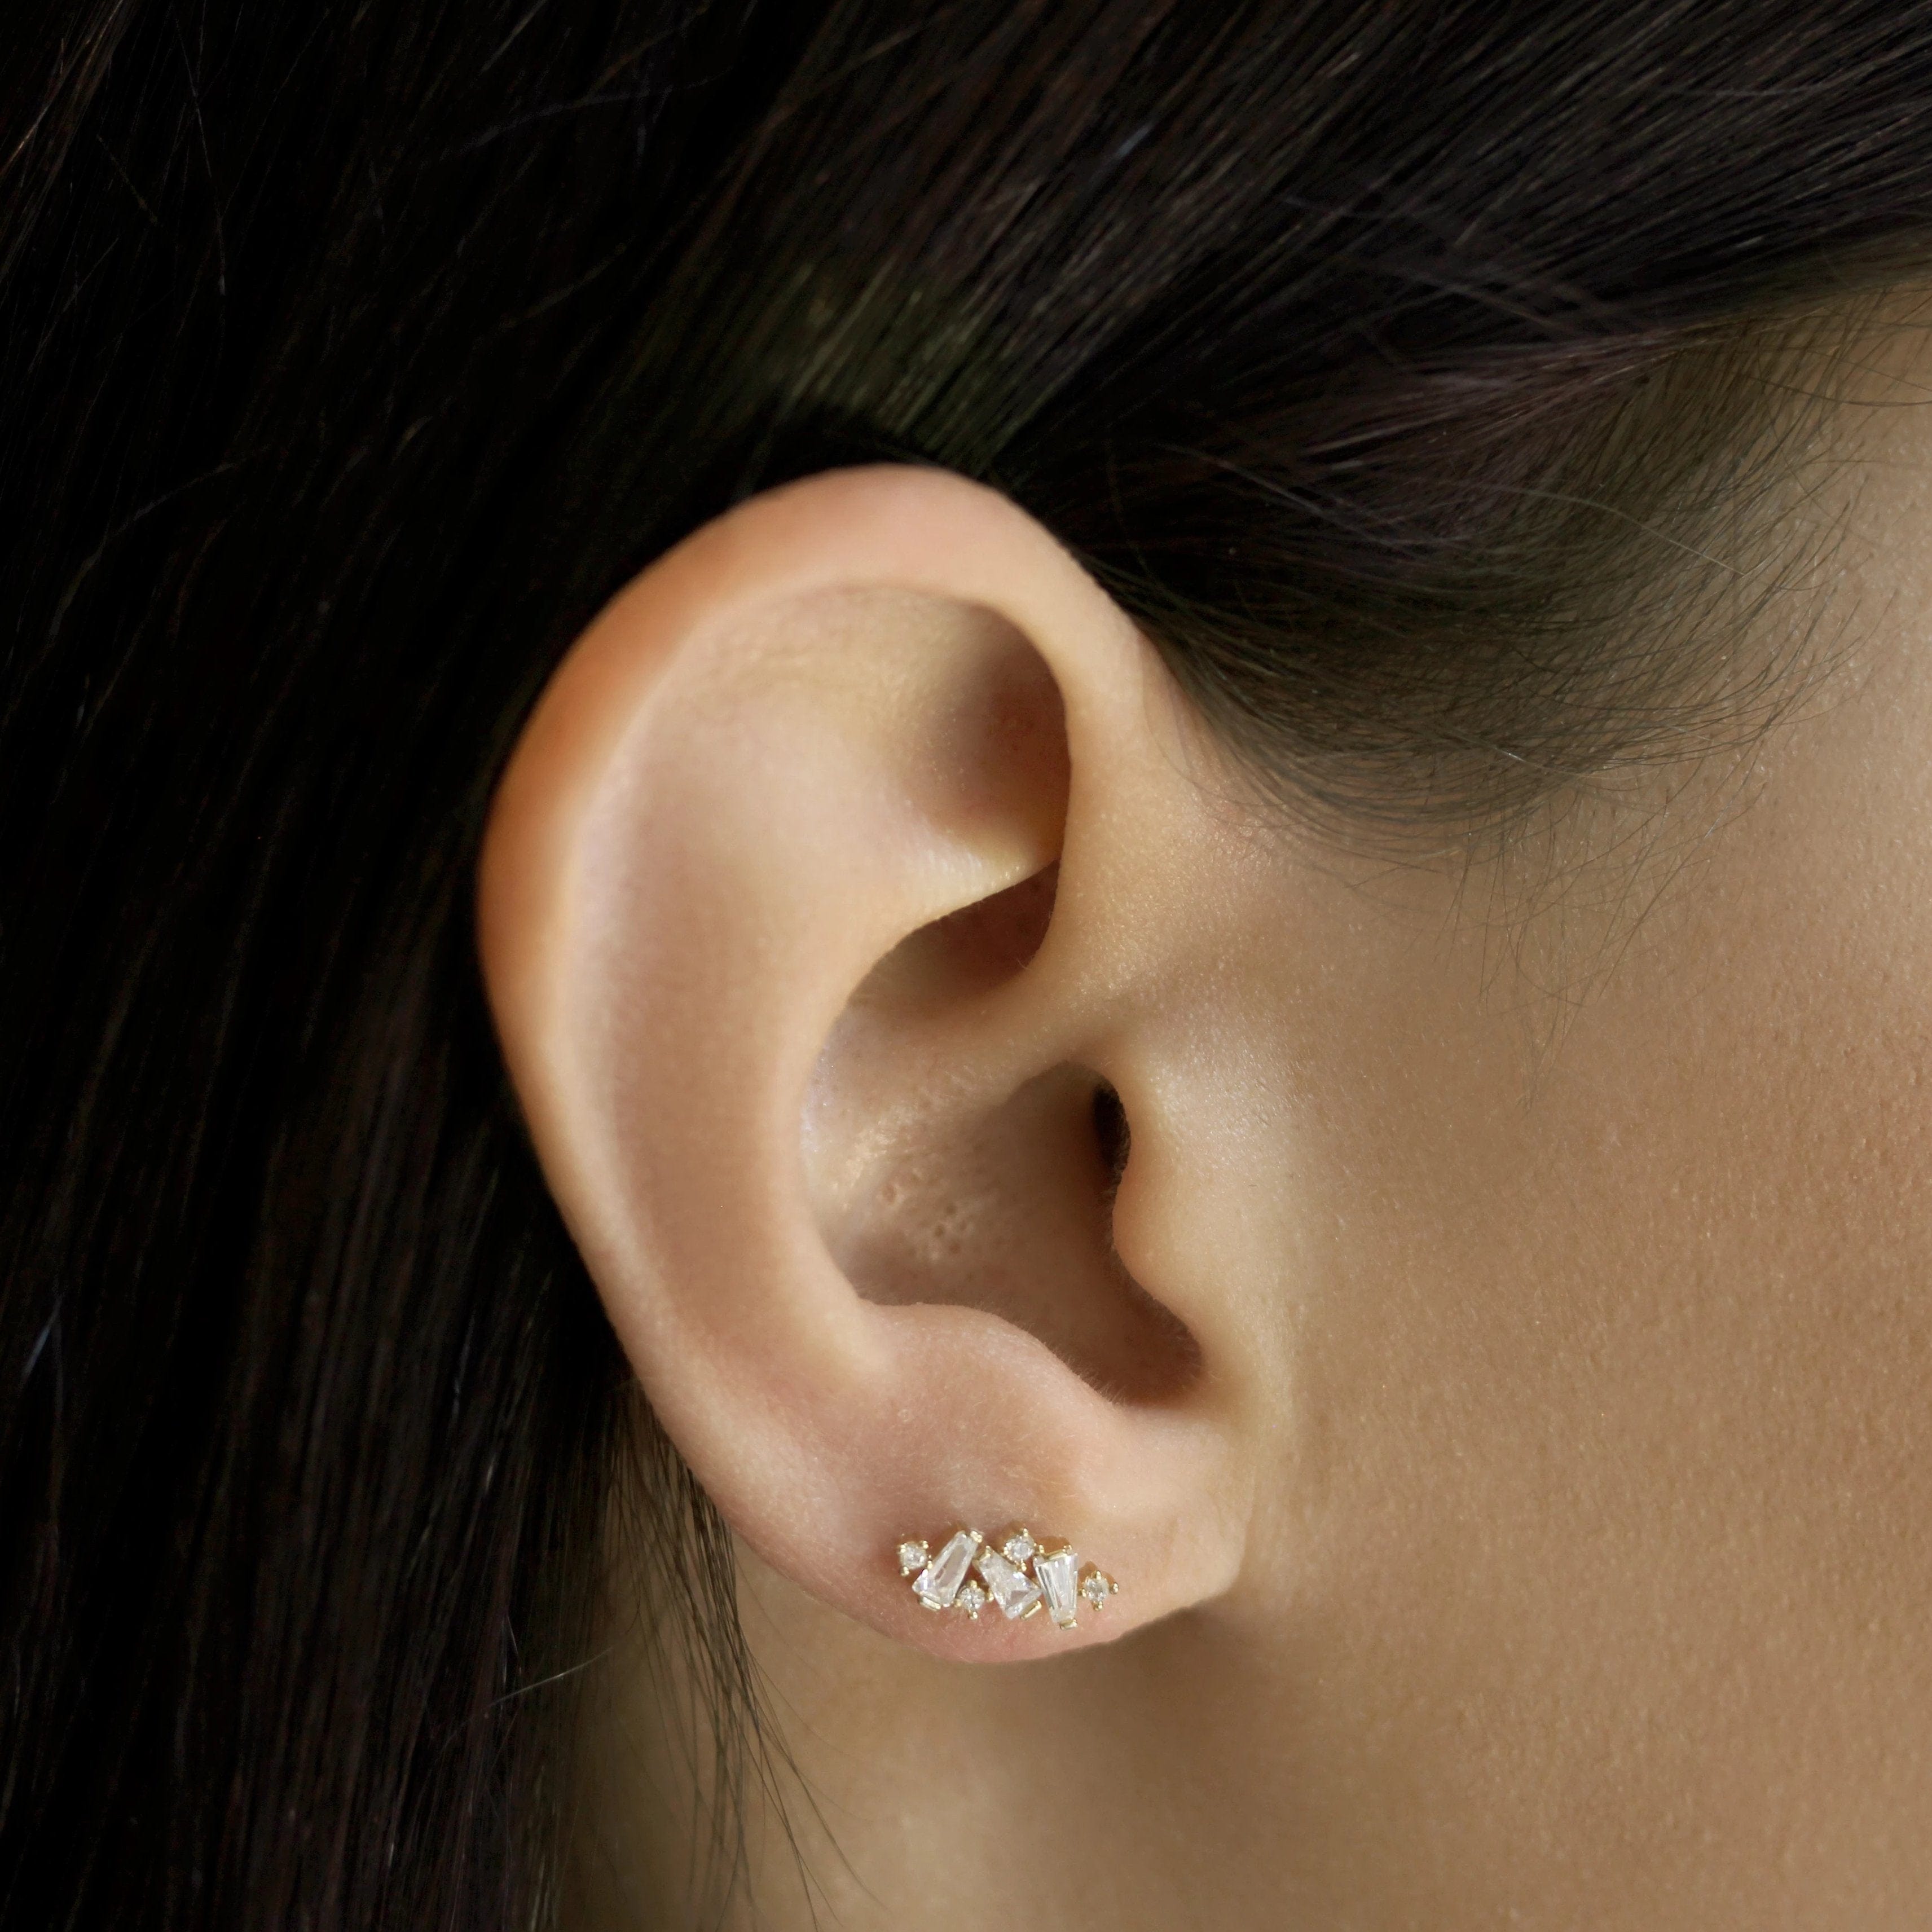 TAI JEWELRY Earrings Cluster Stone Ear Climbers